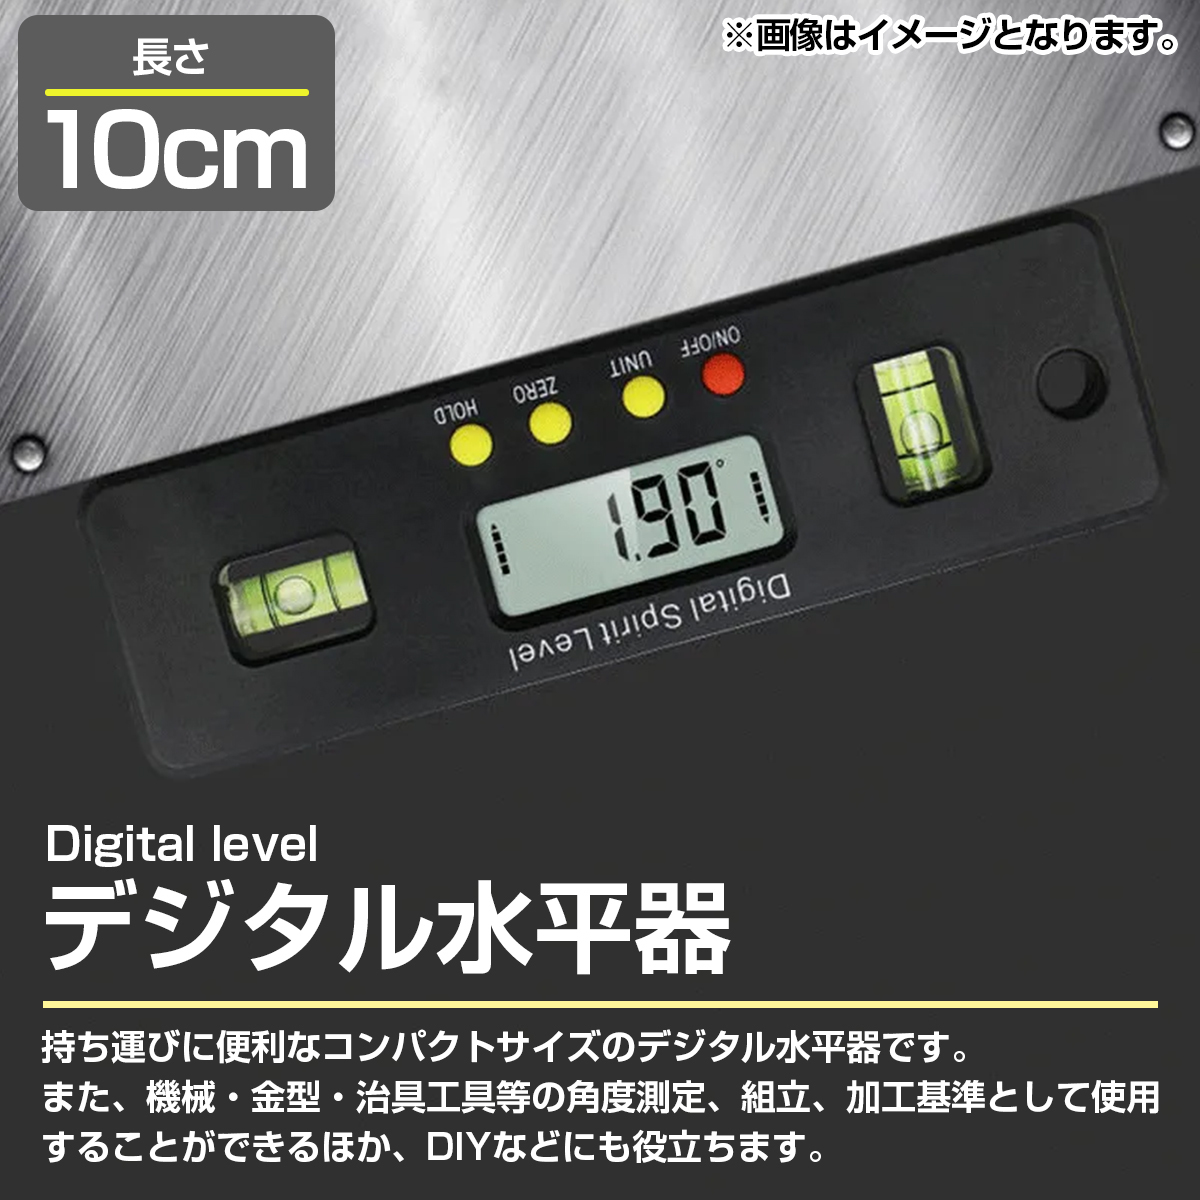 100mm デジタル レベル 水平器 傾斜計 角度計 液晶 表示 レベラー 水平 角度 傾斜 測定 測量 DIY マグネット 付き 工具 ミニ_画像2